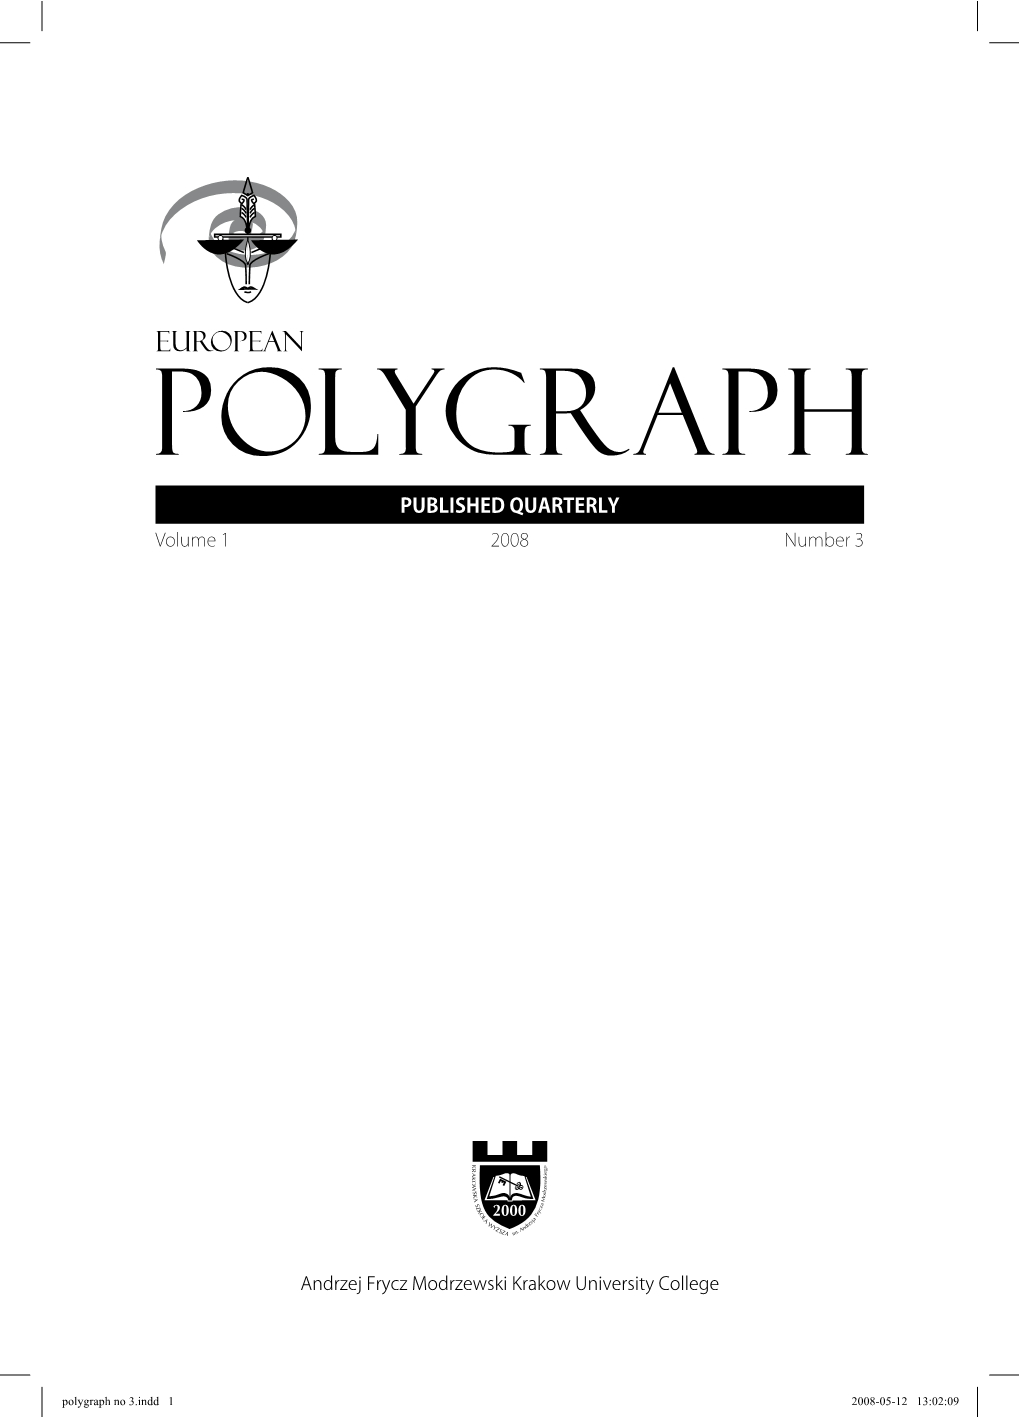 Polygraph examination studies at the University of Silesia